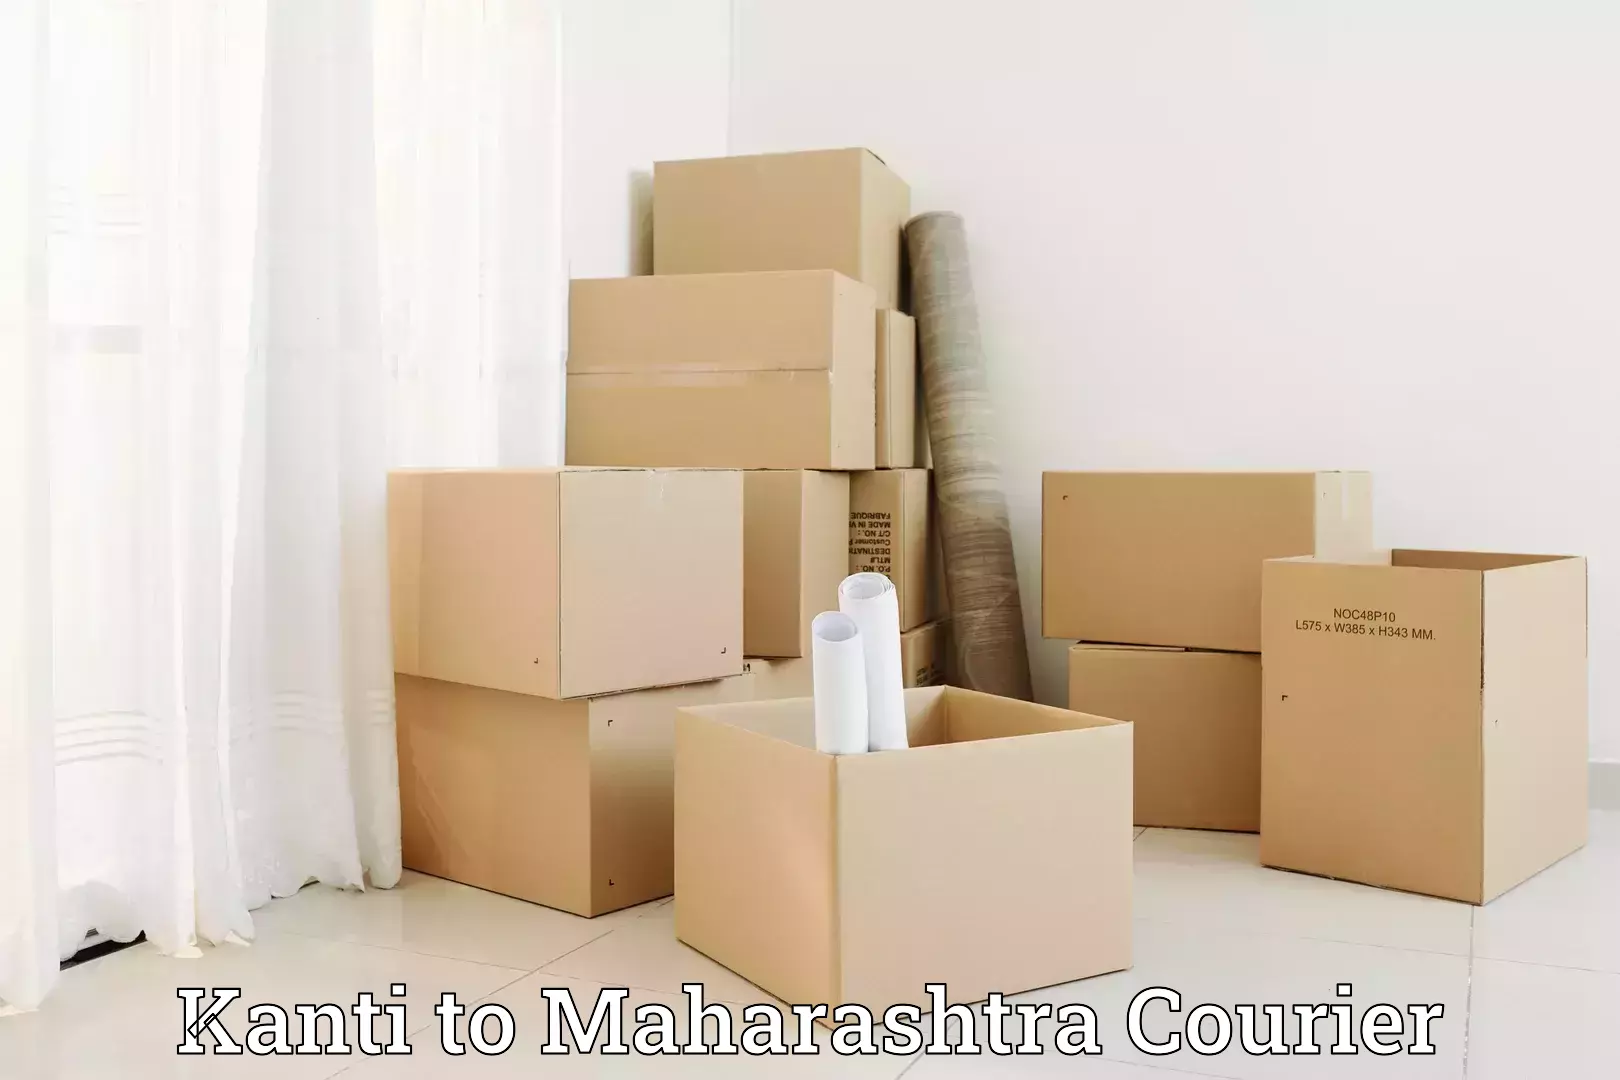 Luggage transport consultancy Kanti to Maharashtra